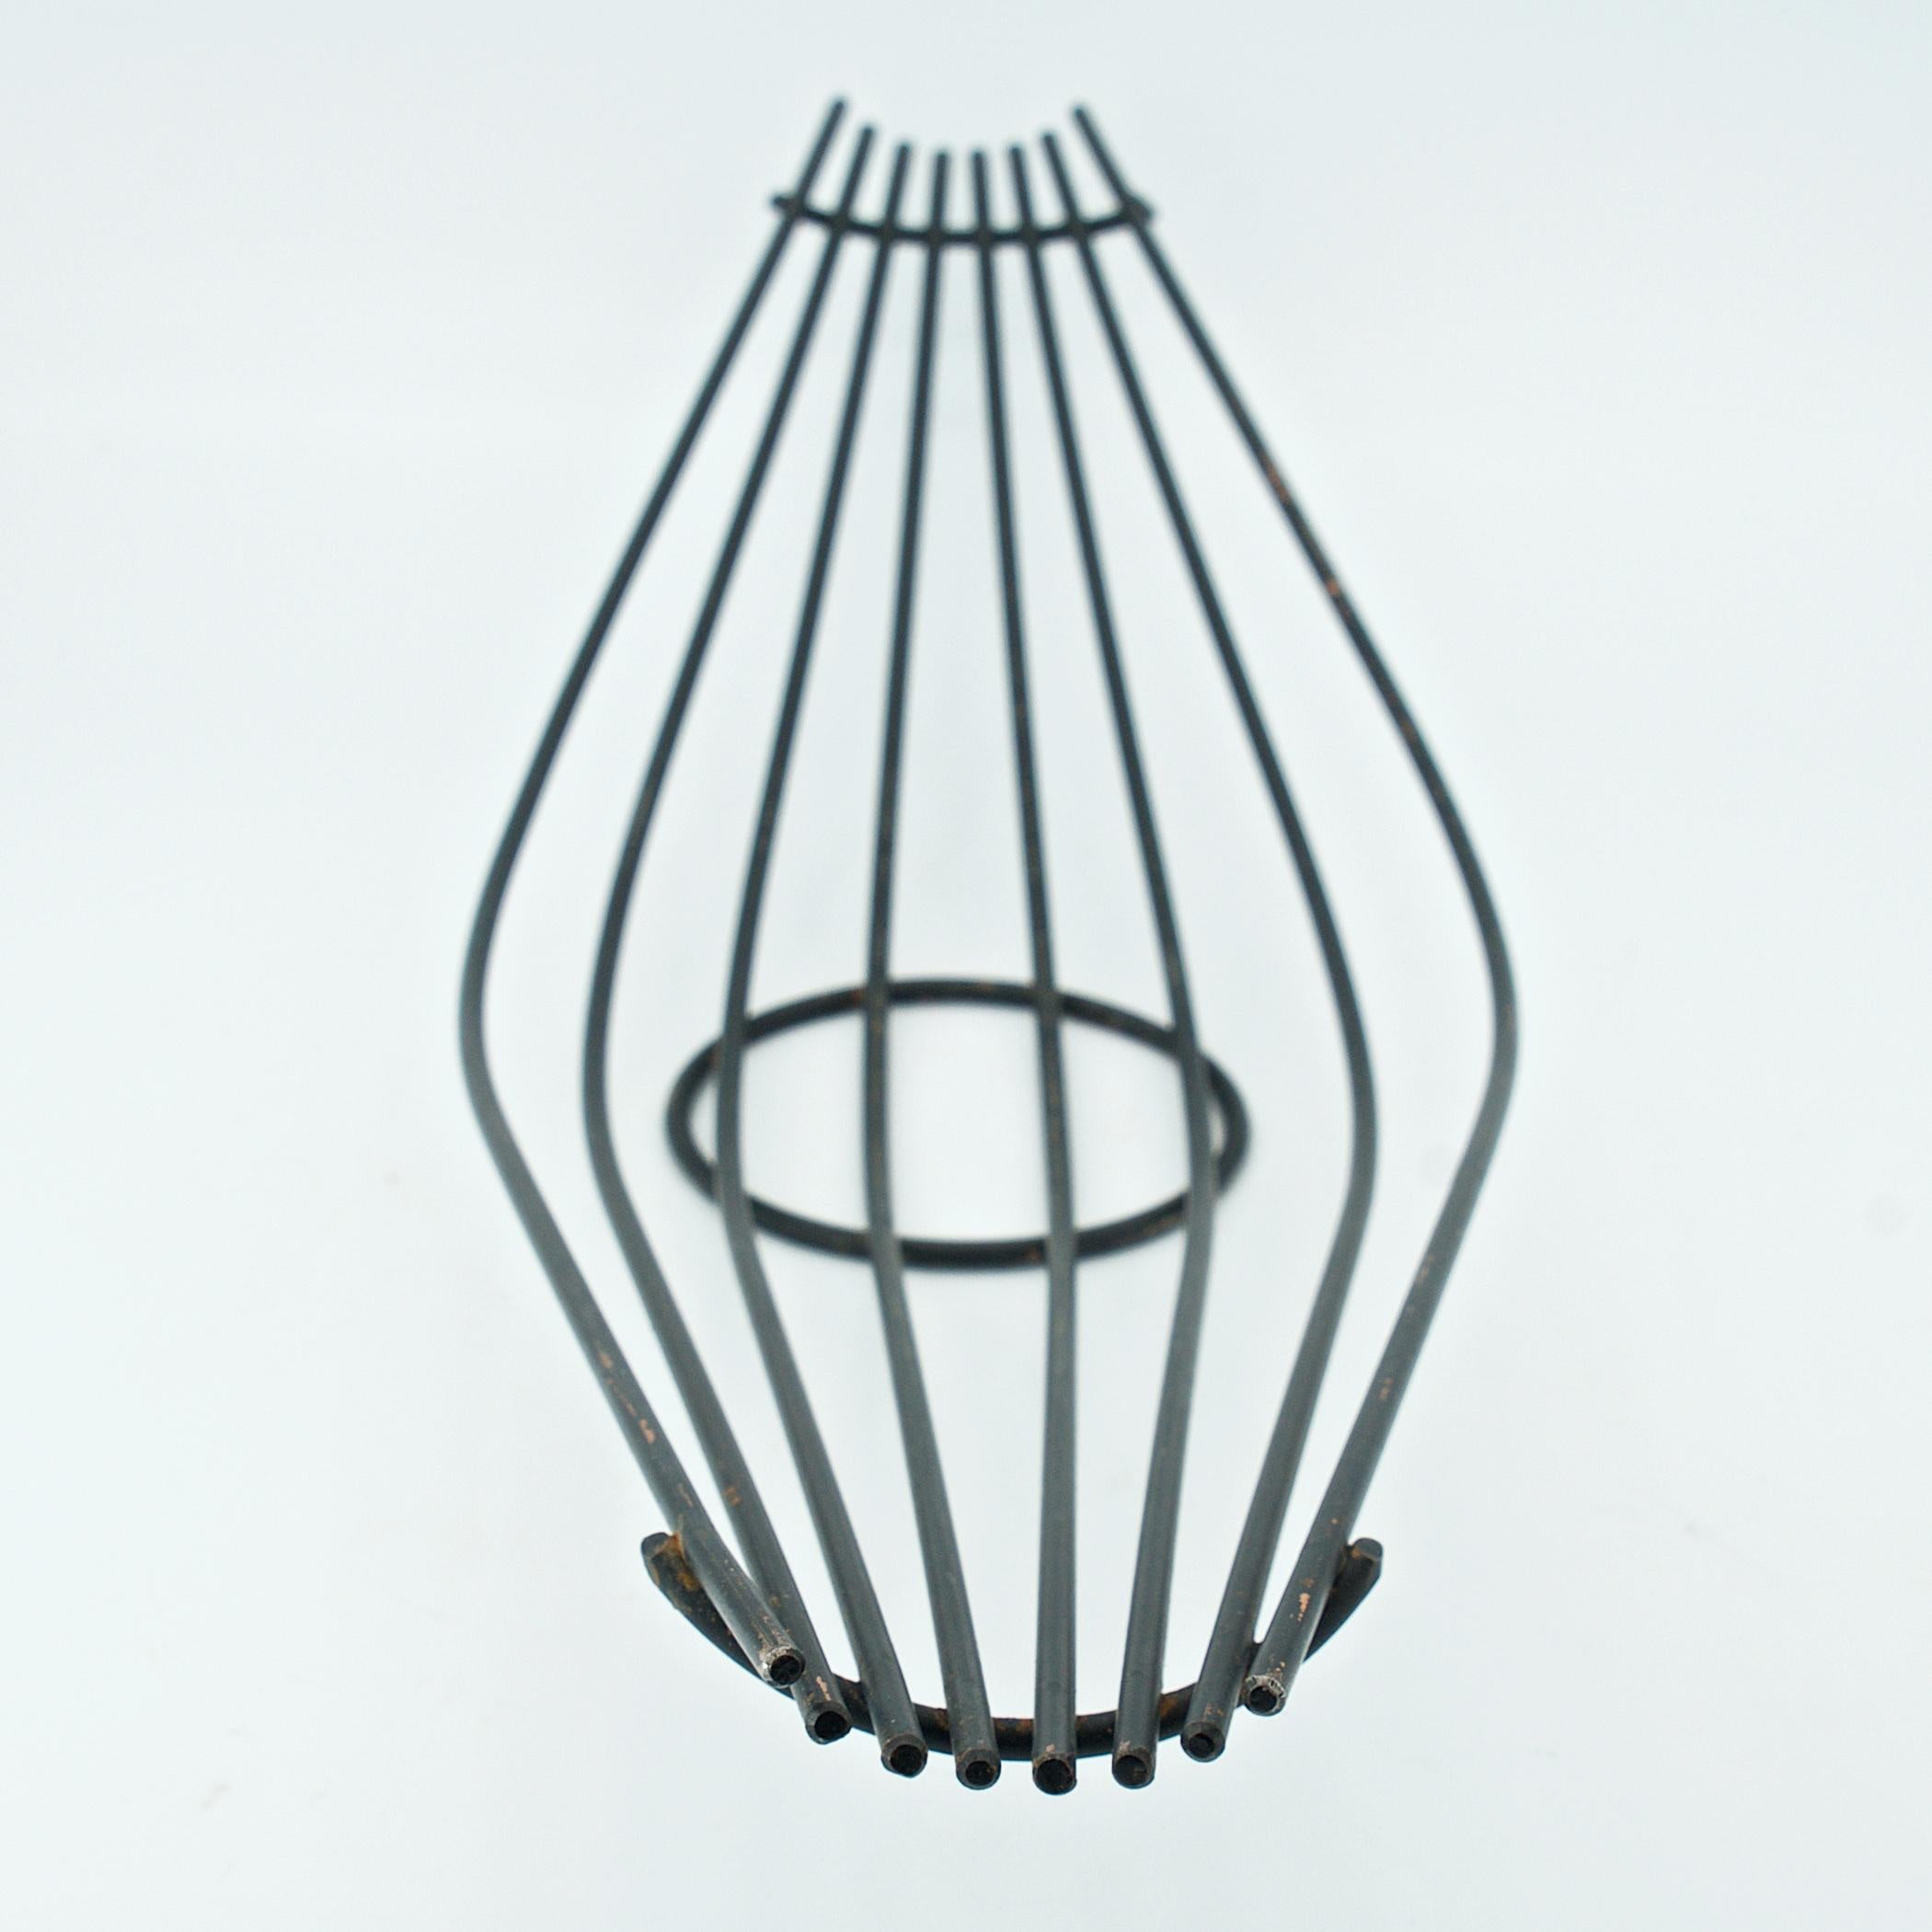 1960s Architectural Steel Wire Sculpture Bowl Centerpiece Guitar Basket McM In Good Condition For Sale In Hyattsville, MD